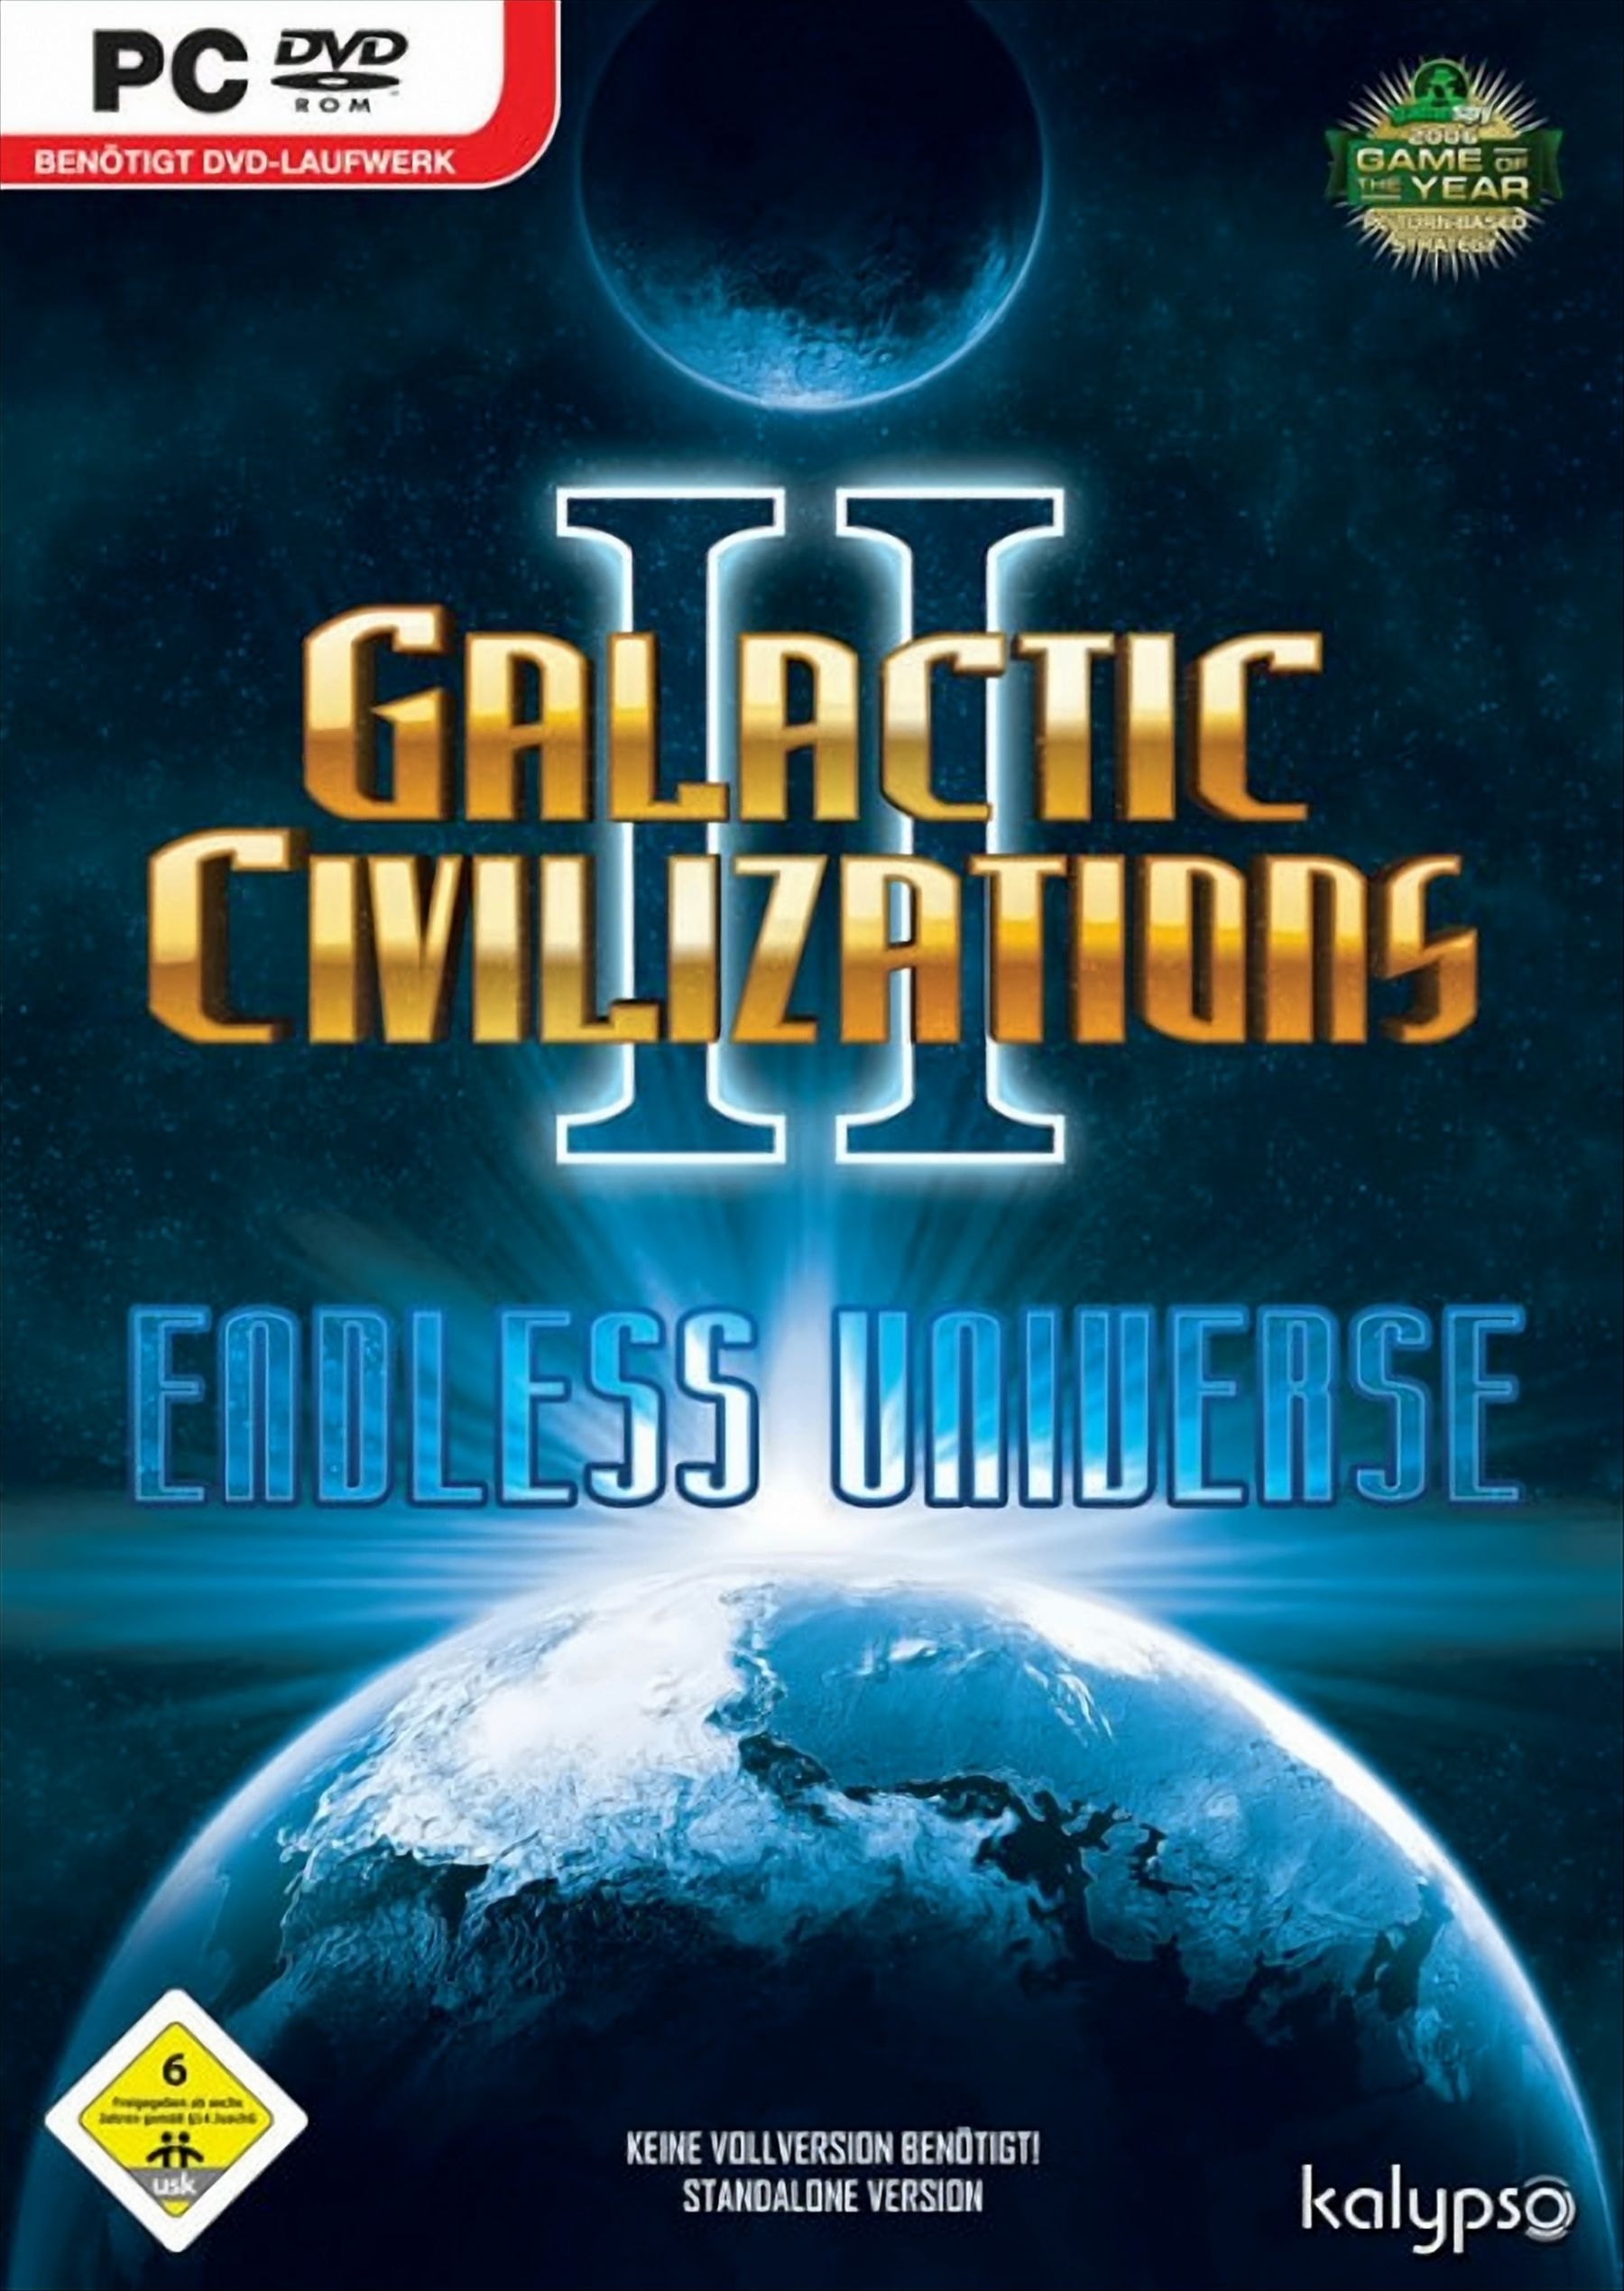 Galactic Civilizations II: Endless Universe [PC] 